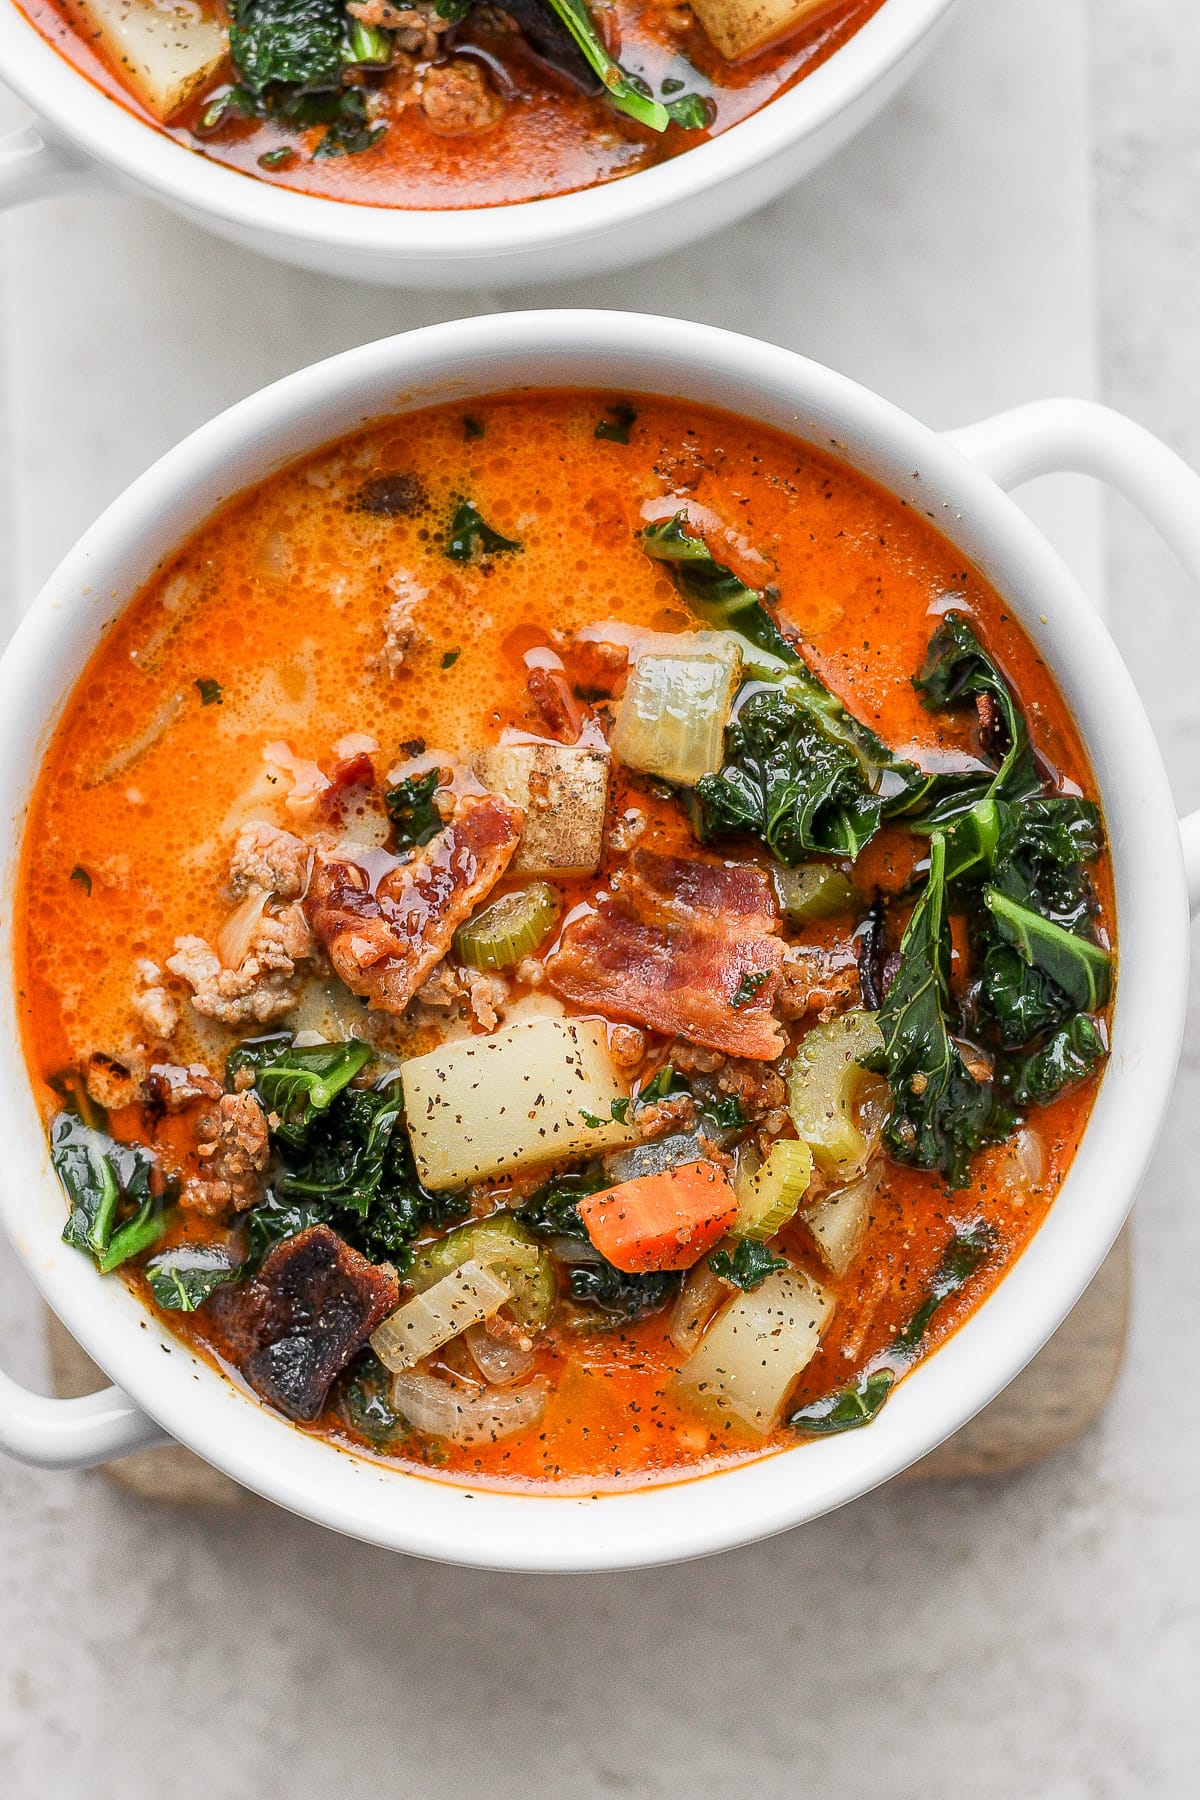 Whole30 zuppa toscana soup recipe.